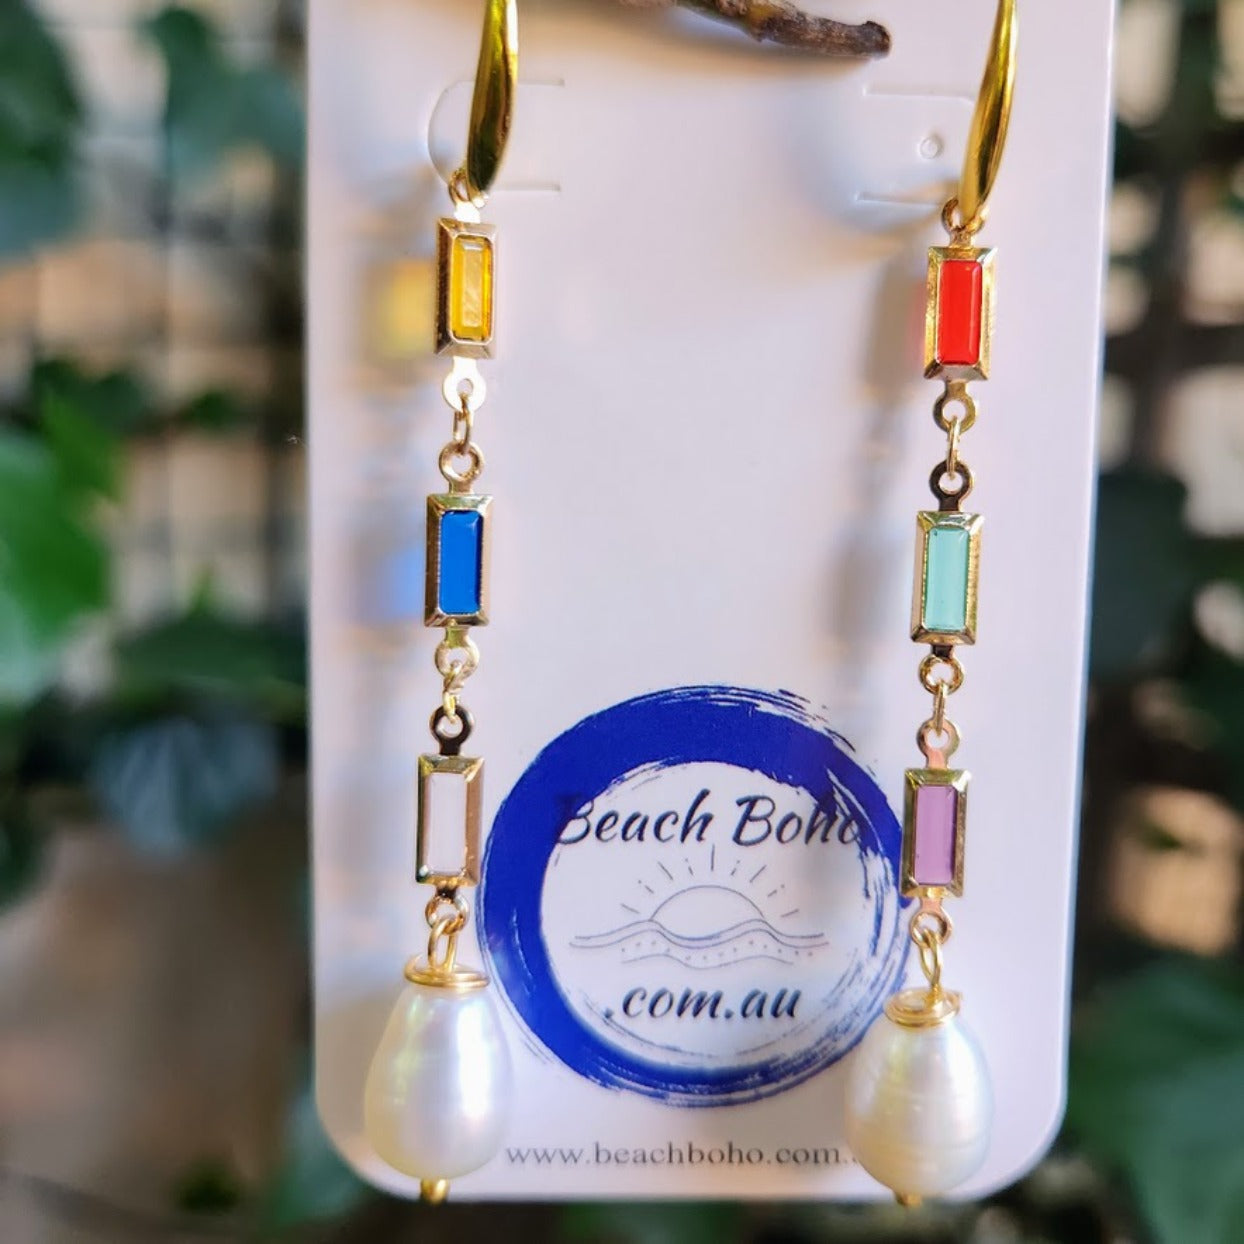 BAROQUE PEARL CRYSTAL DANGLES - Premium earrings from www.beachboho.com.au - Just $70! Shop now at www.beachboho.com.au